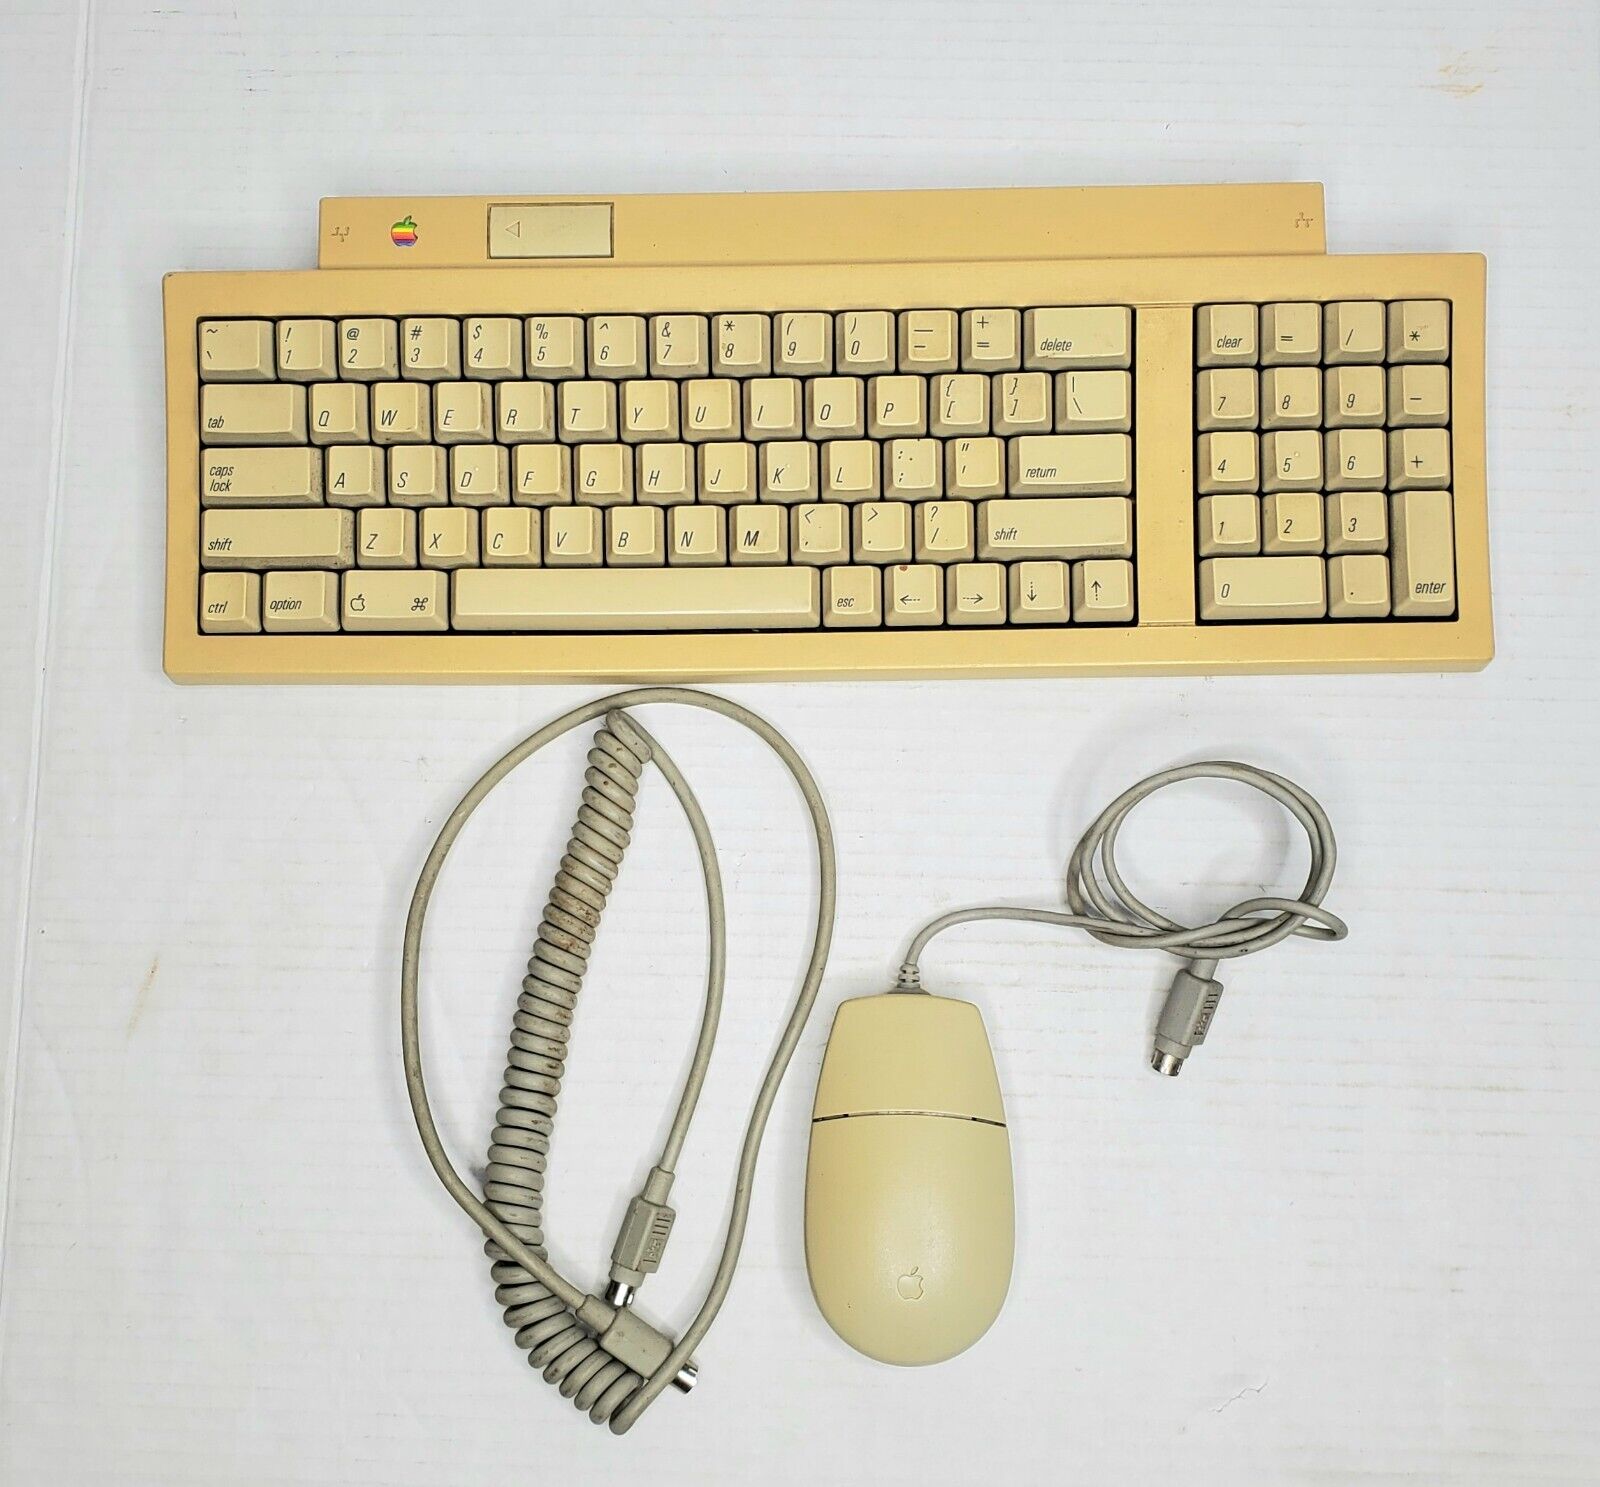 Apple Keyboard II M0487 & Apple Desktop Bus Mouse II M2706 Lot Tested Vintage